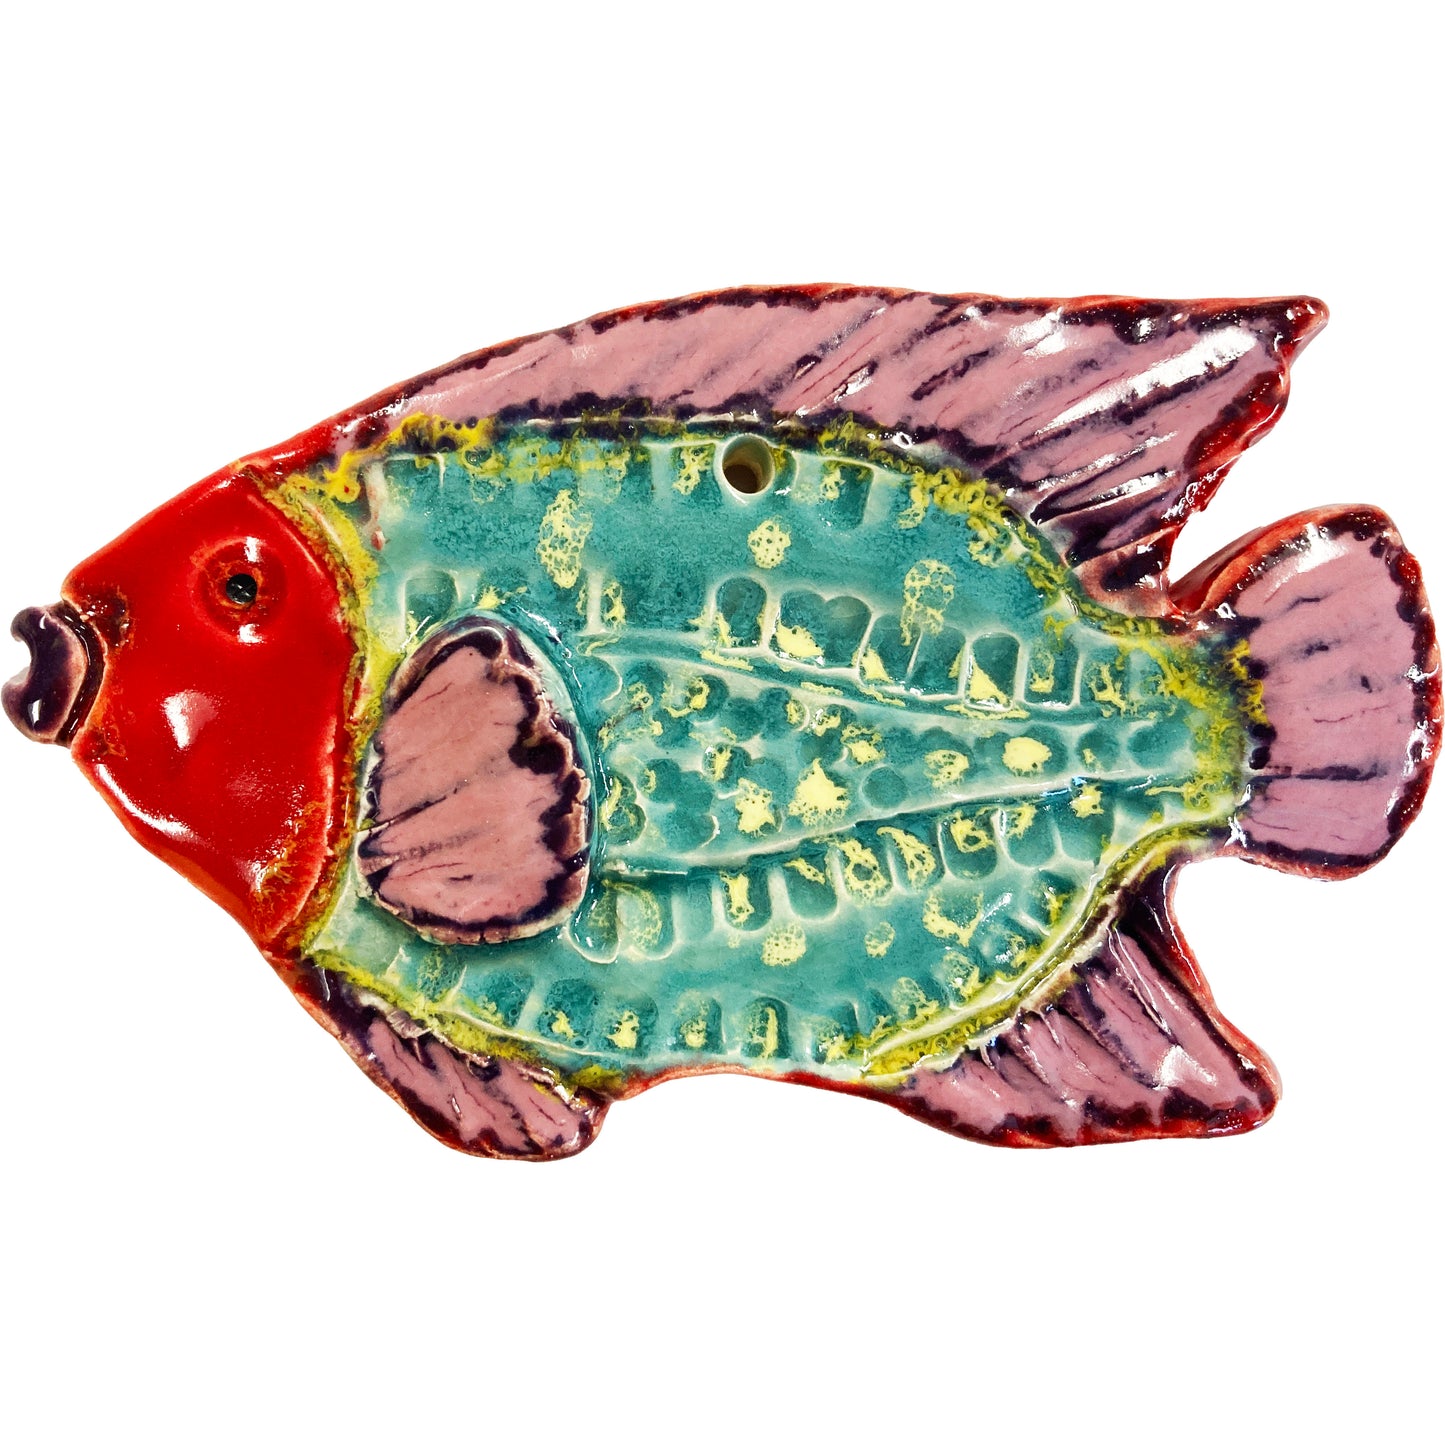 WATCH Resources Art Guild - Ceramic Arts Handmade Clay Crafts Fresh Fish 5-inch x 3-inch Glazed by Jennifer Horne